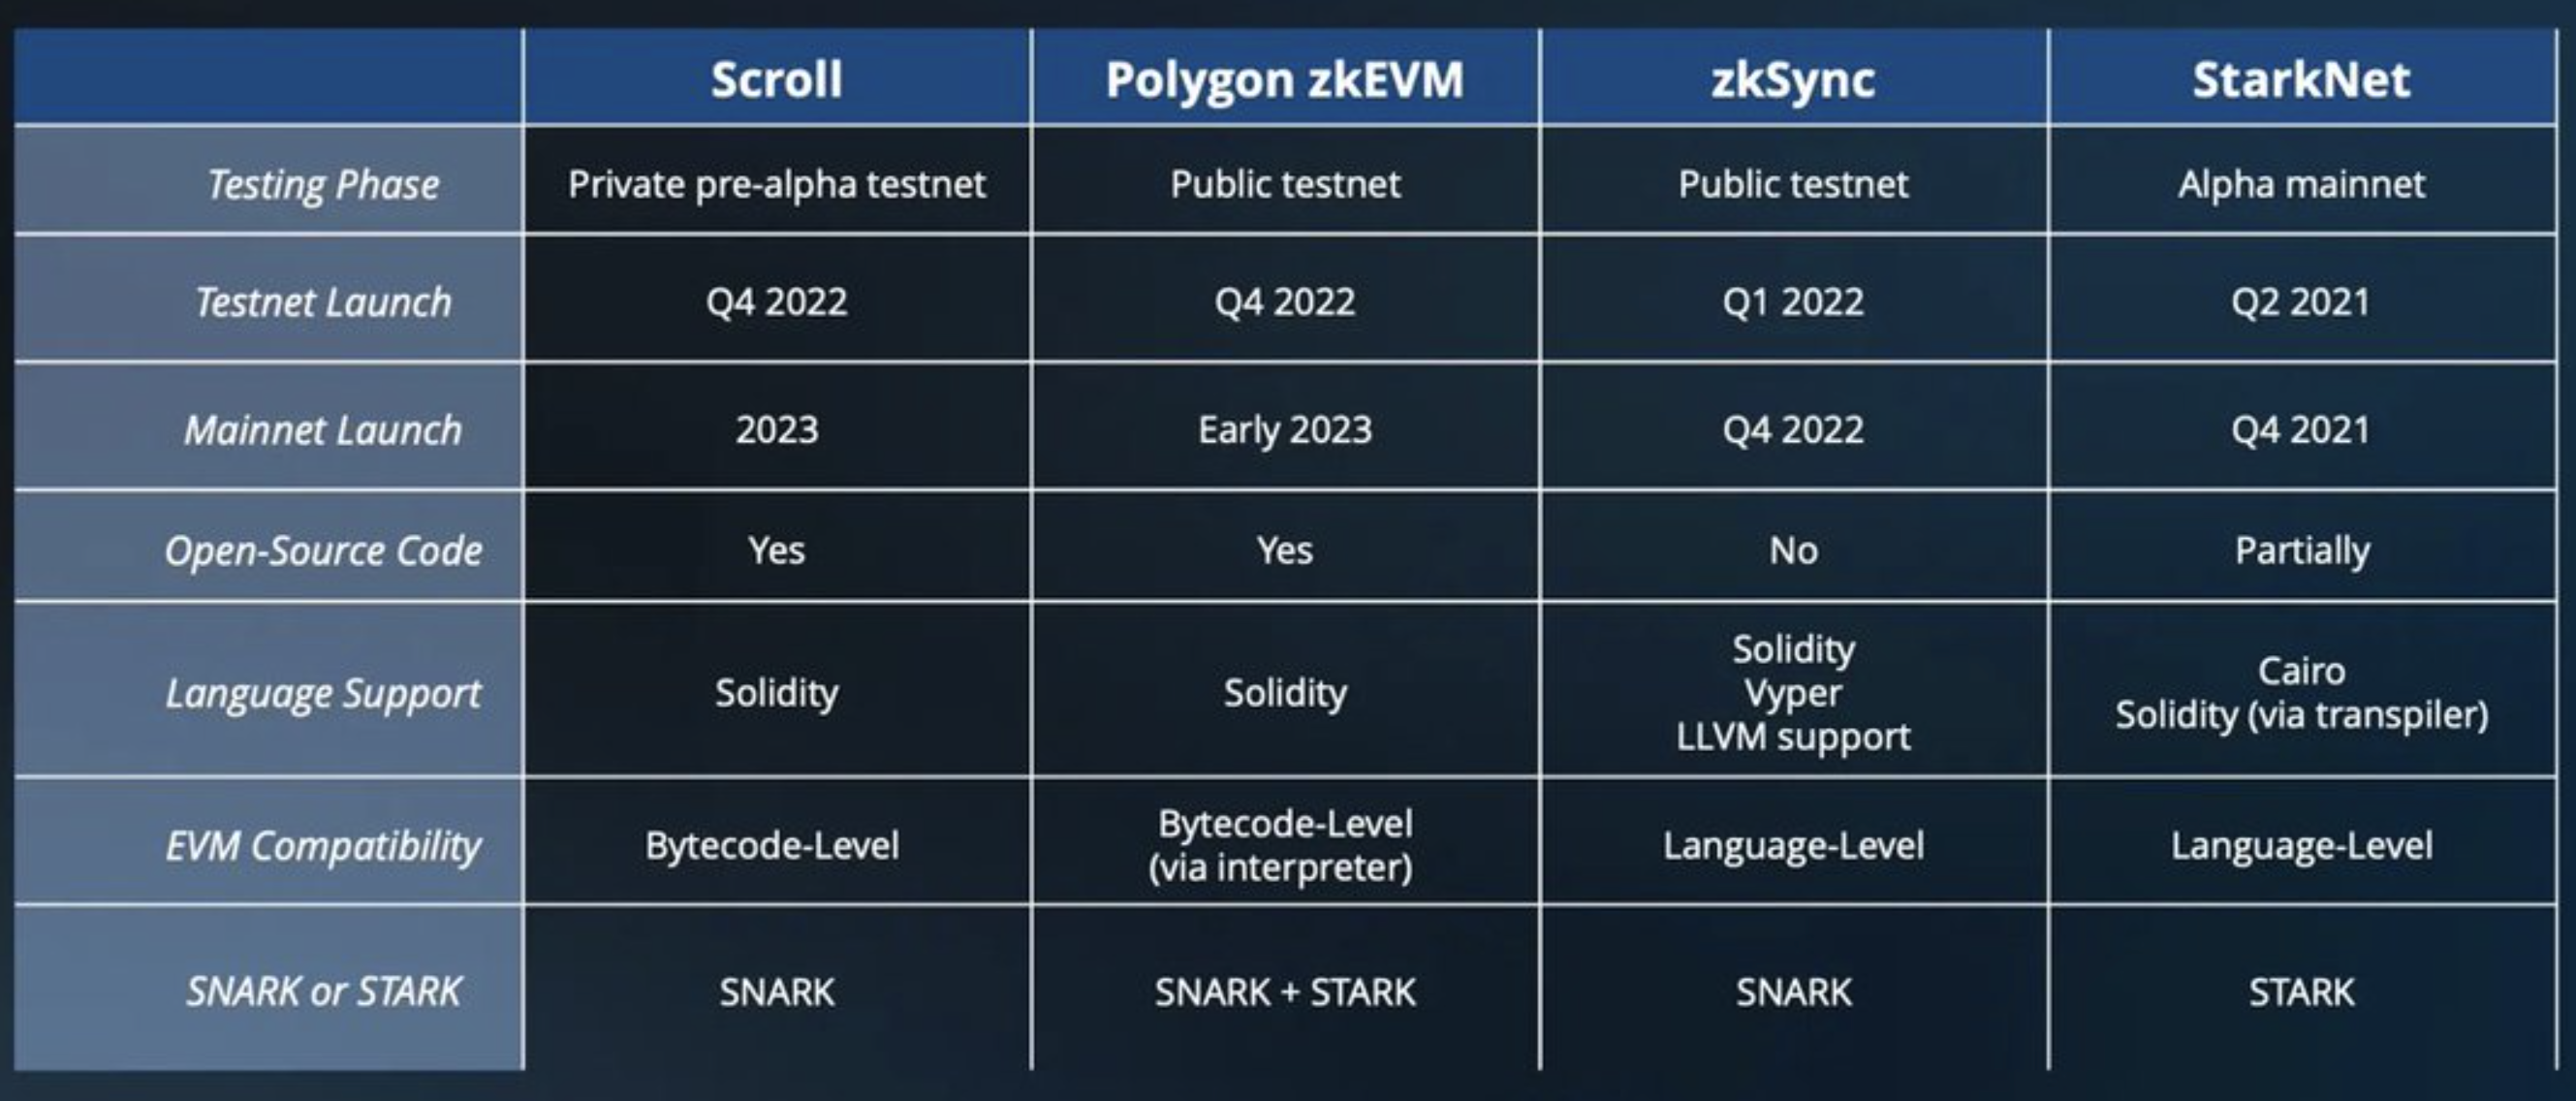 Comparaison zkEVMs, novembre 2022